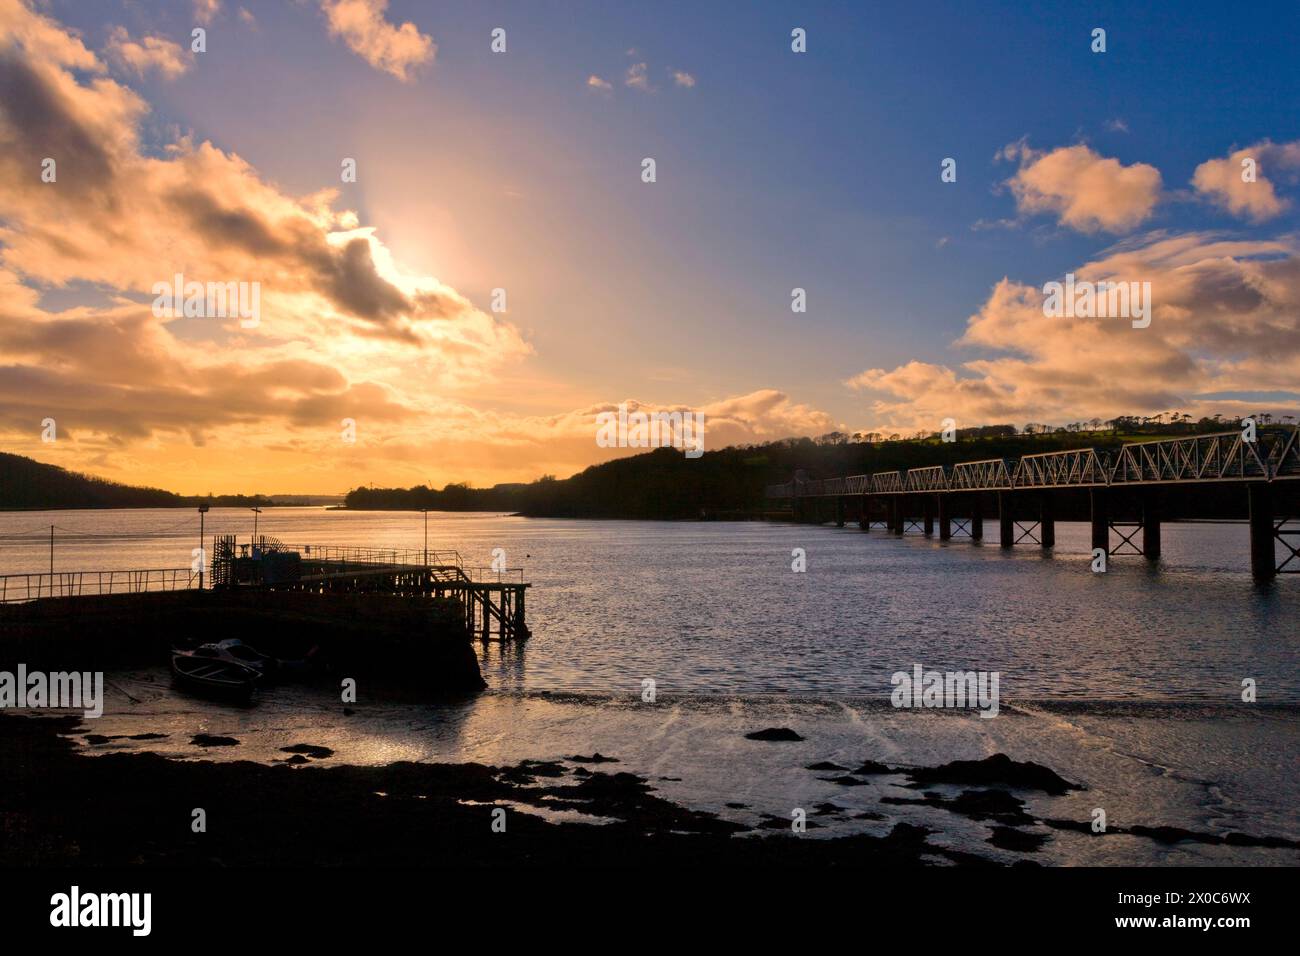 The now redundant Barrow Rail Bridge crossing the River Barrow between counties Wexford and Kilkenny, Ireland Stock Photo